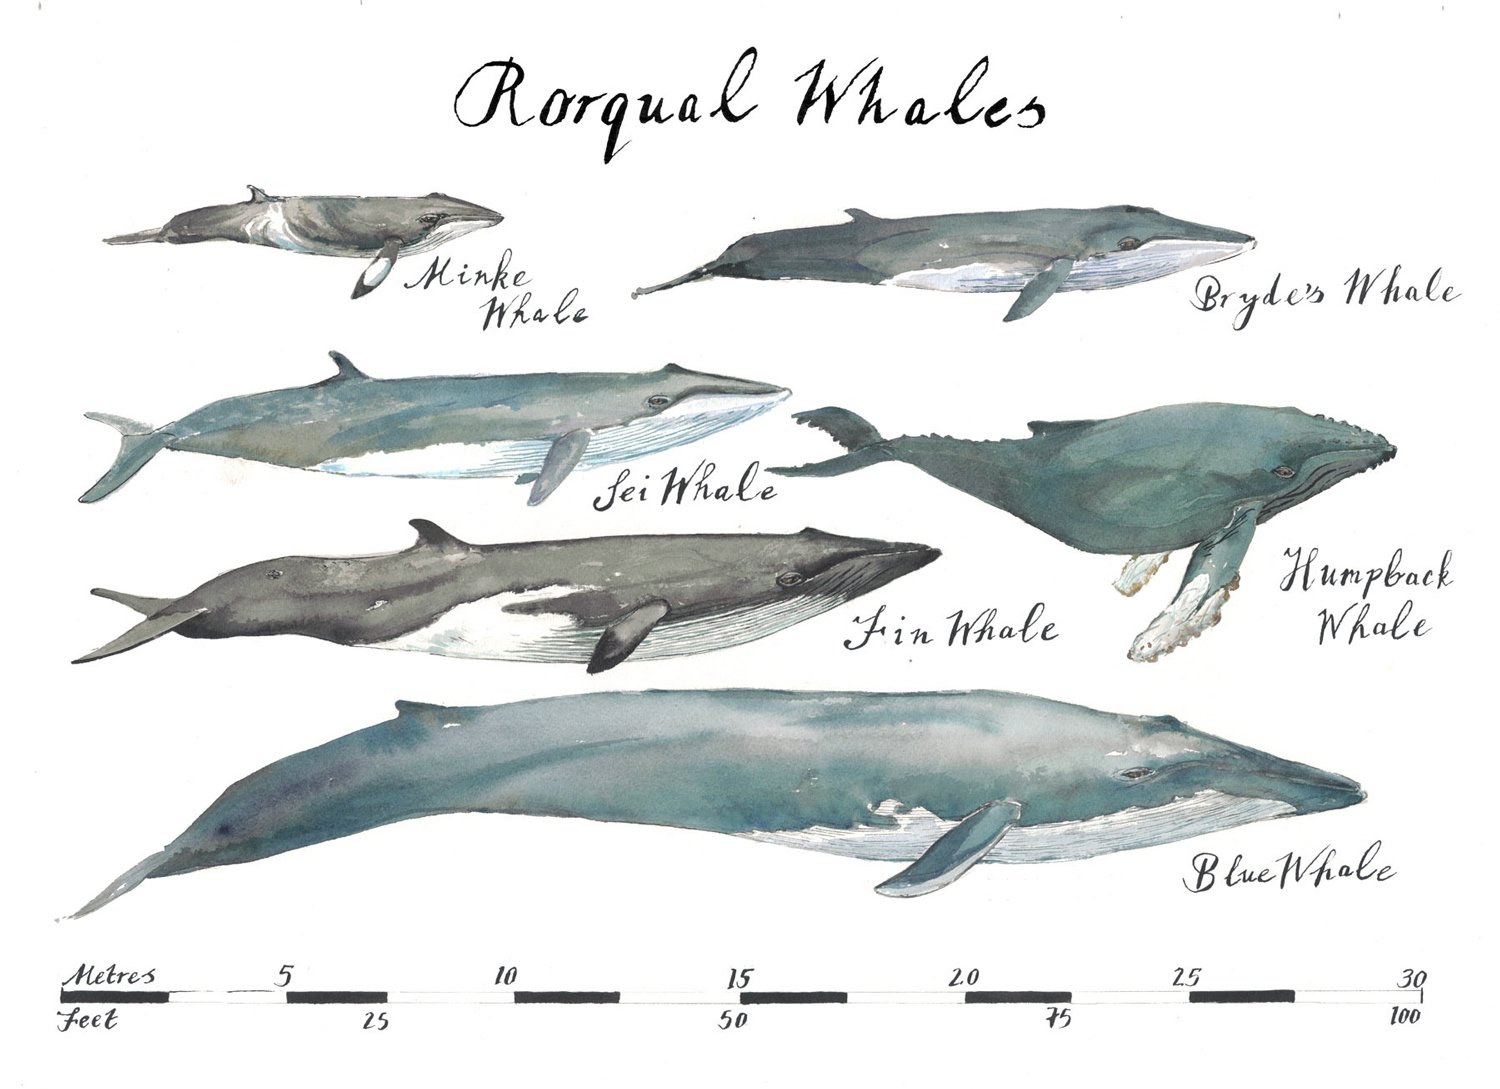 camilla-seddon-illustration-edinburgh-whale-chart.jpg